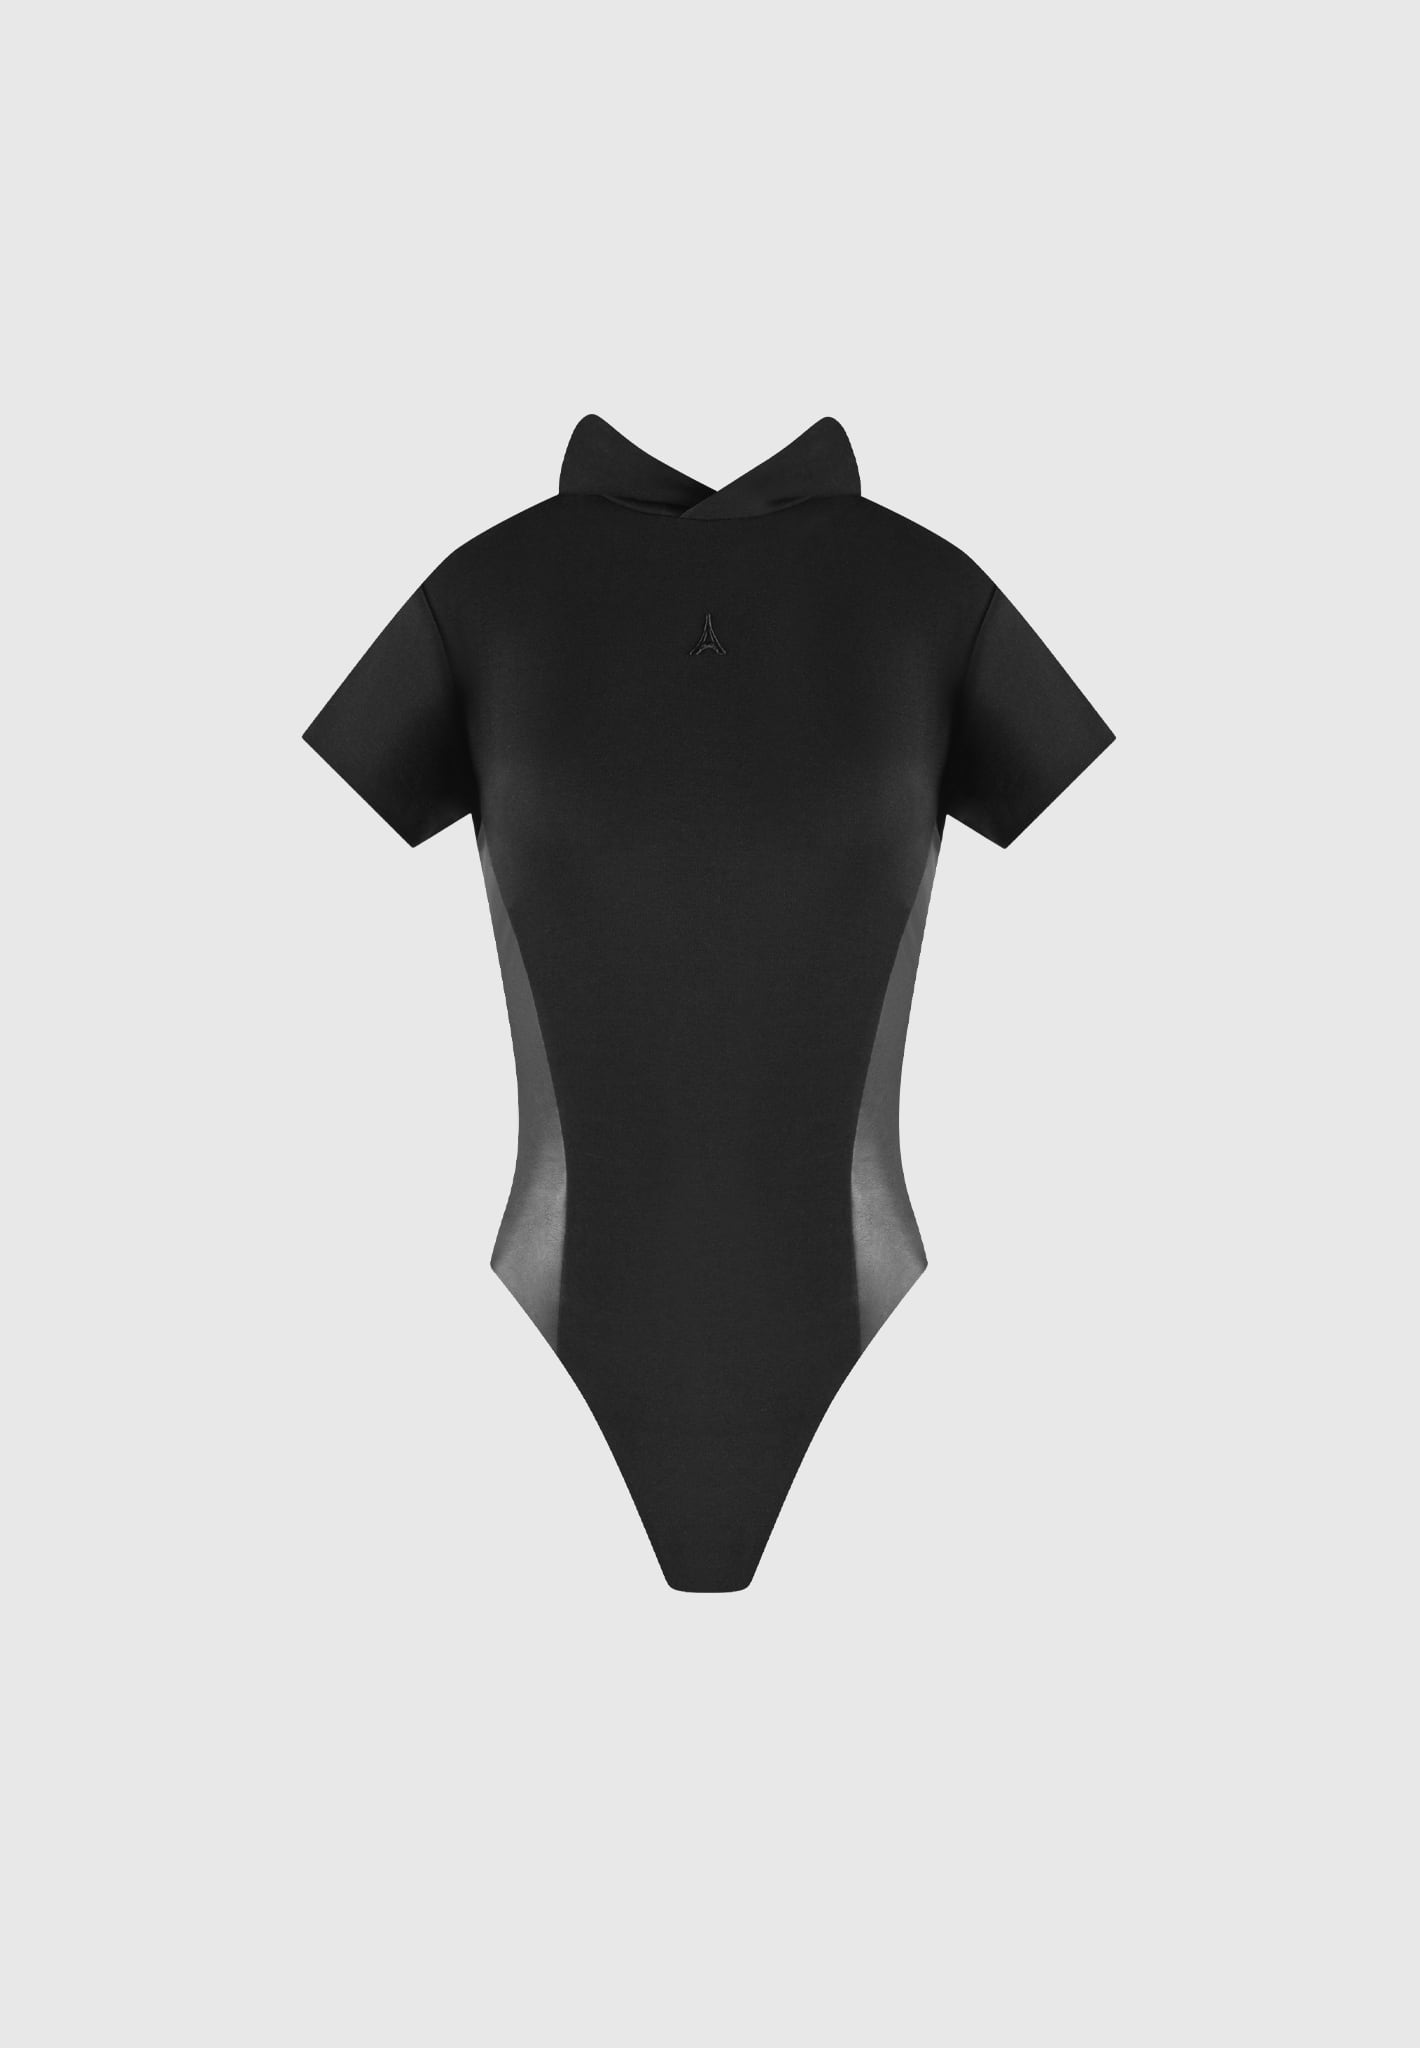 houseofzivah - December Sales ✍✍✍👍 LV body suit Size